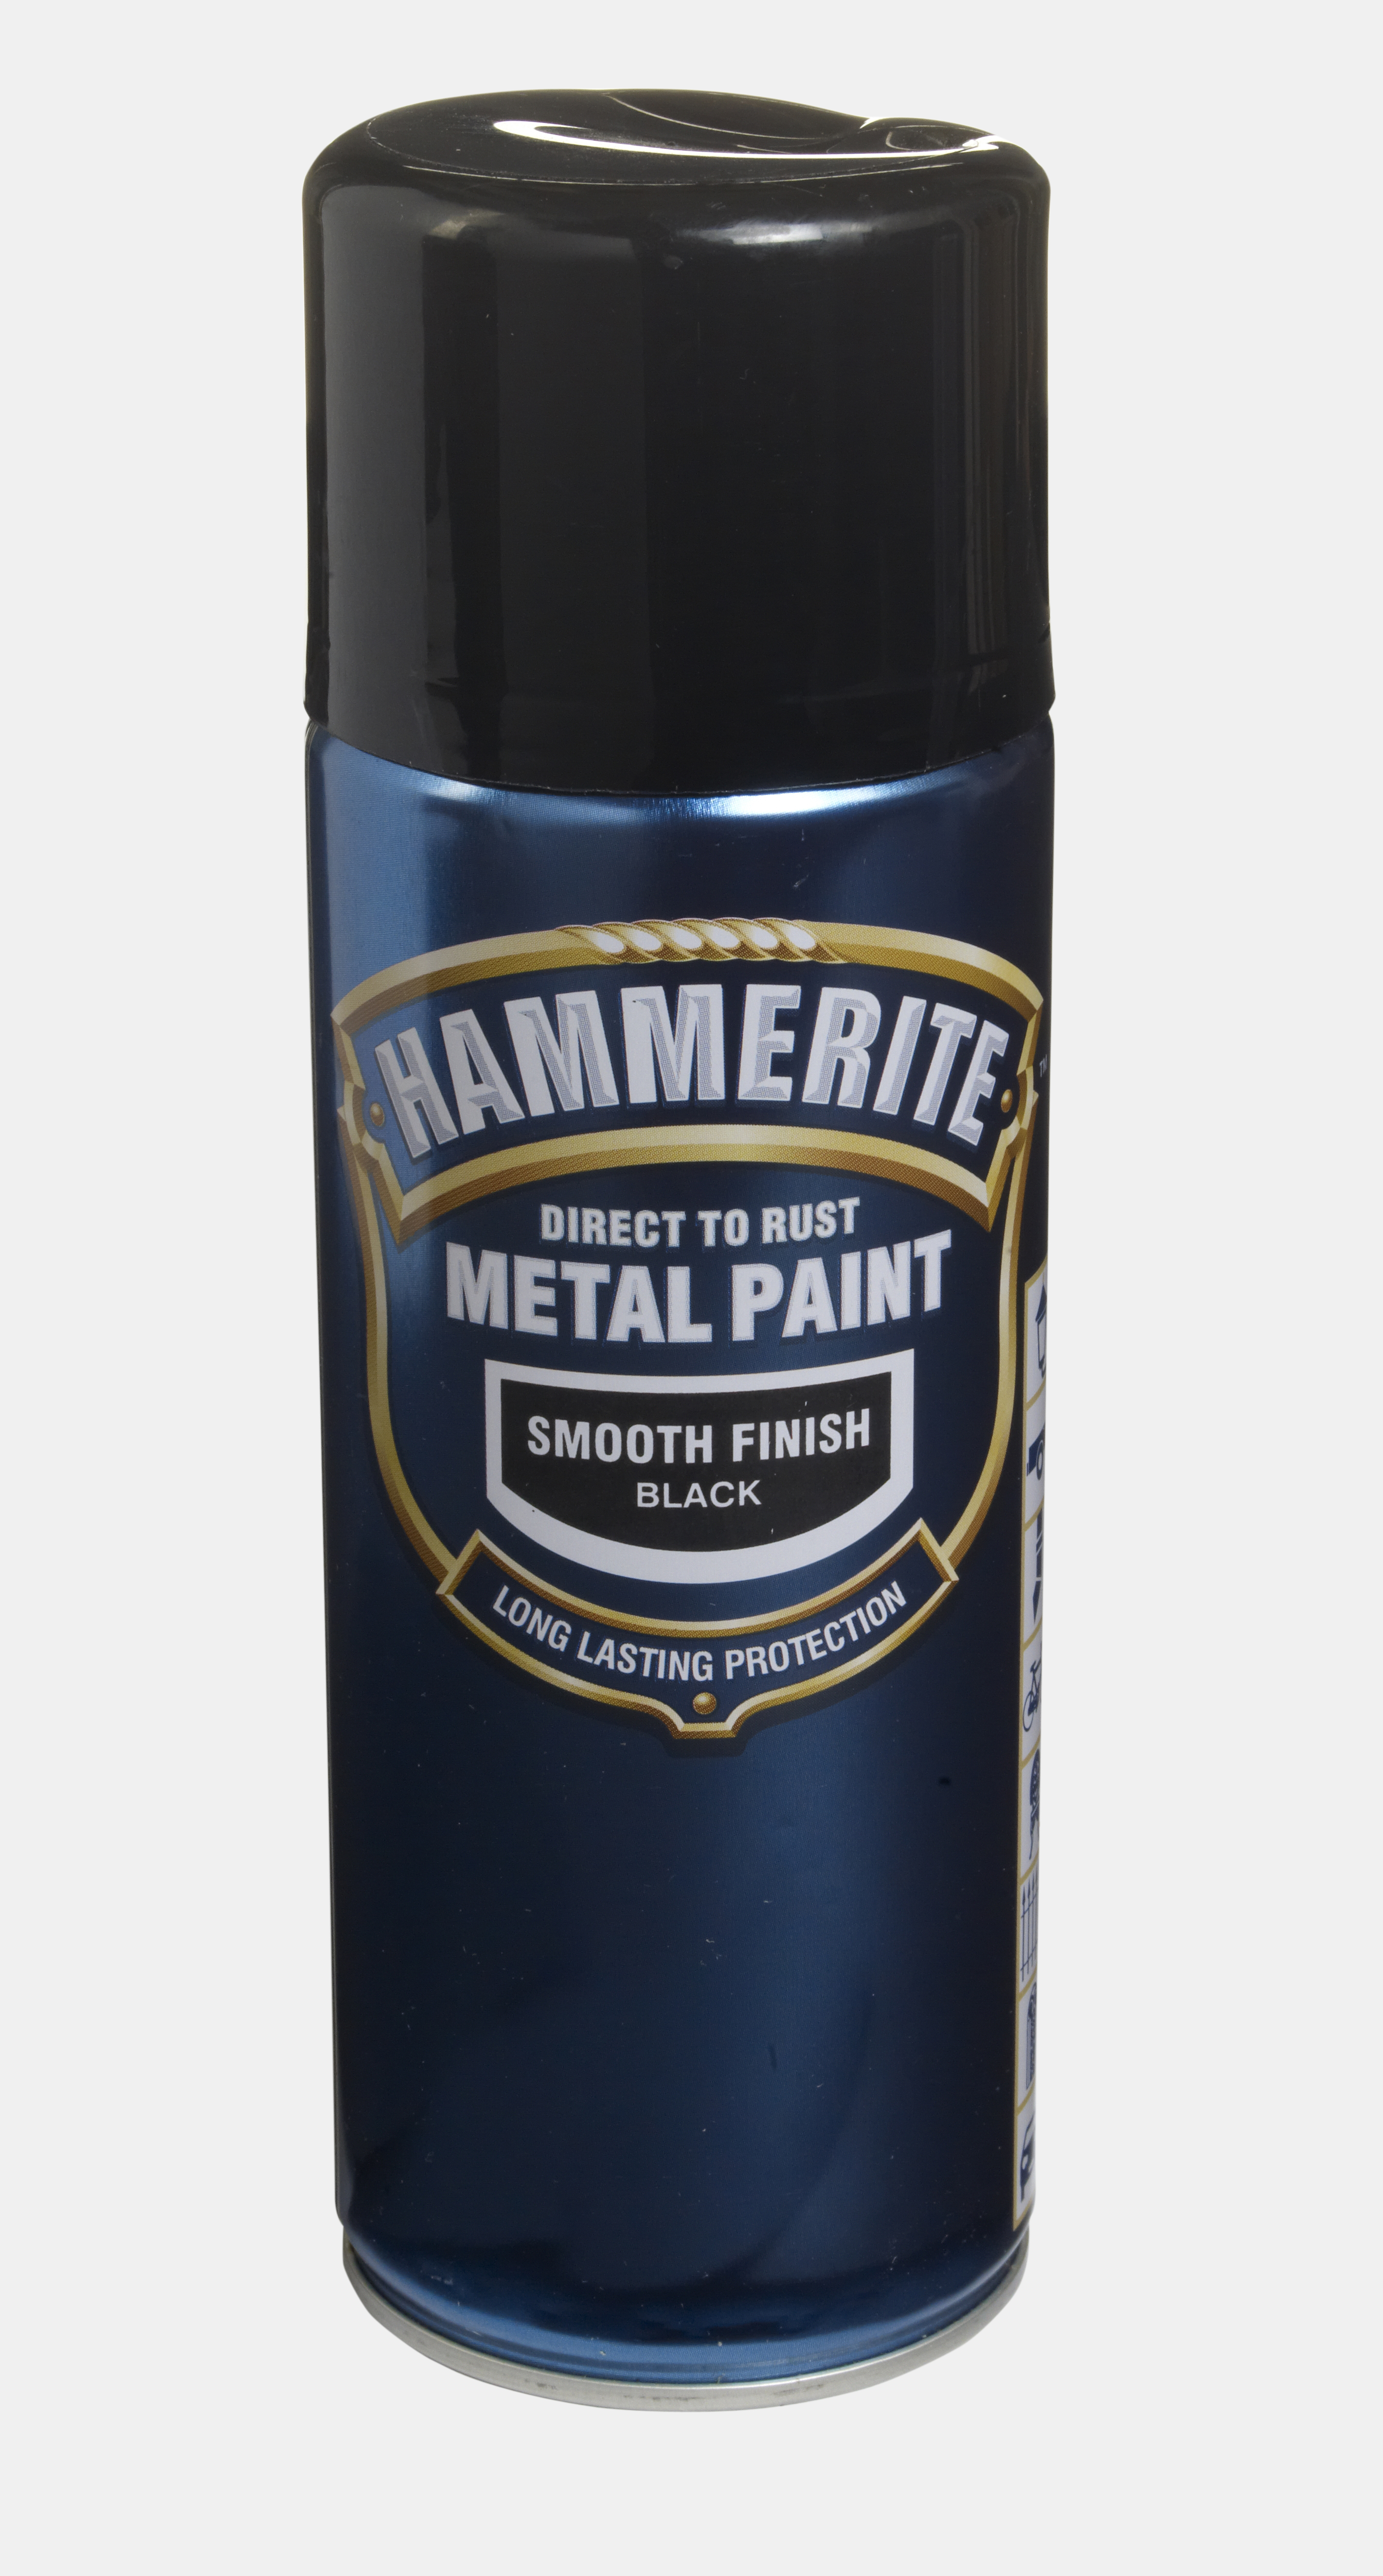 Hammerite smooth finish